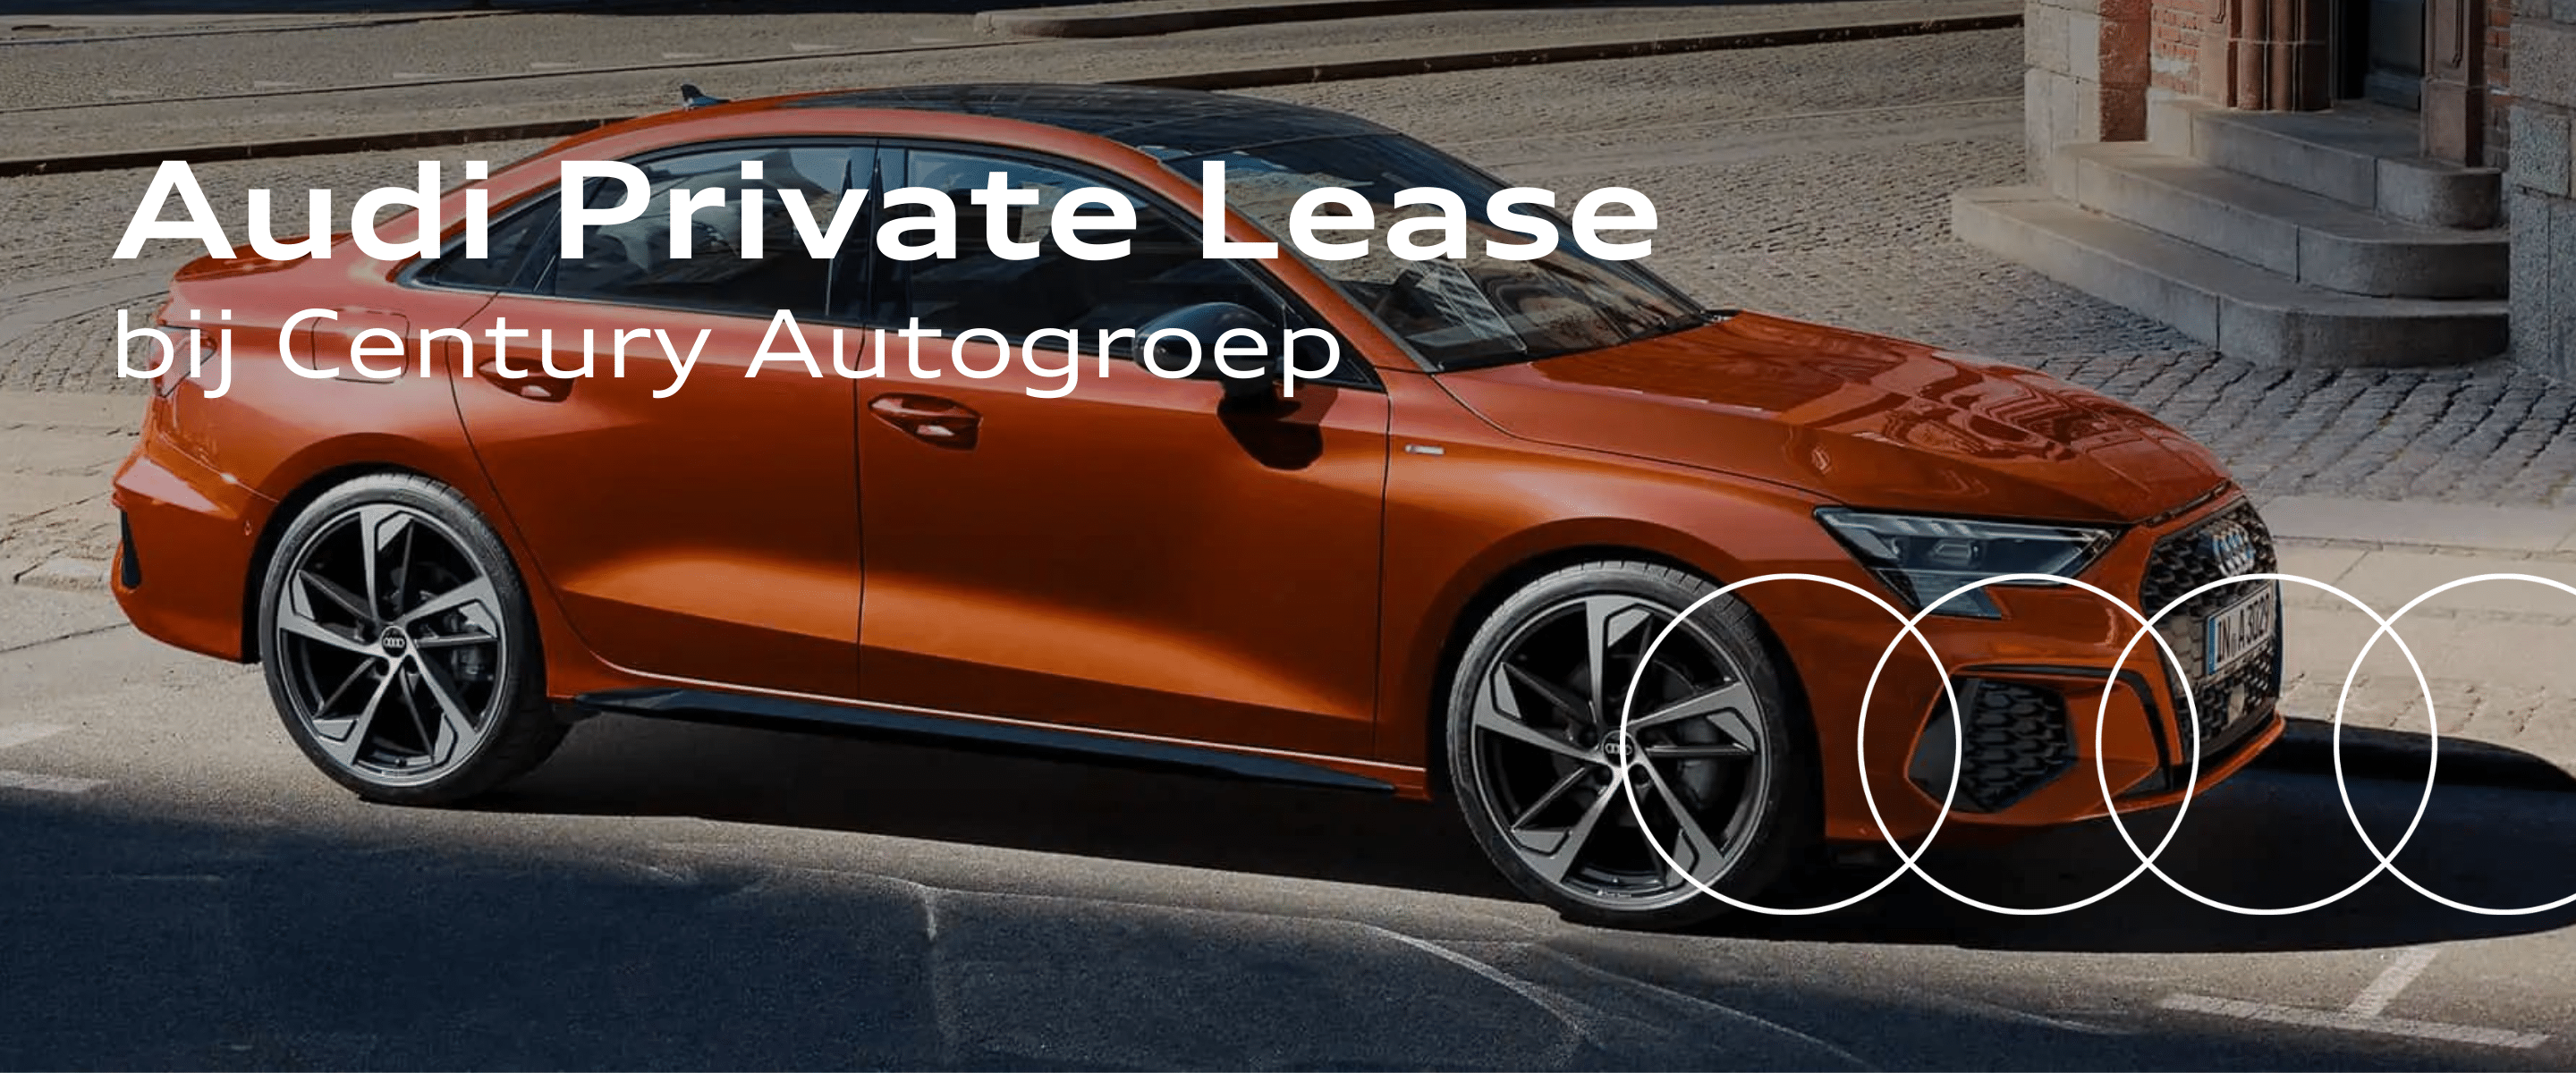 Audi Private Lease (1)